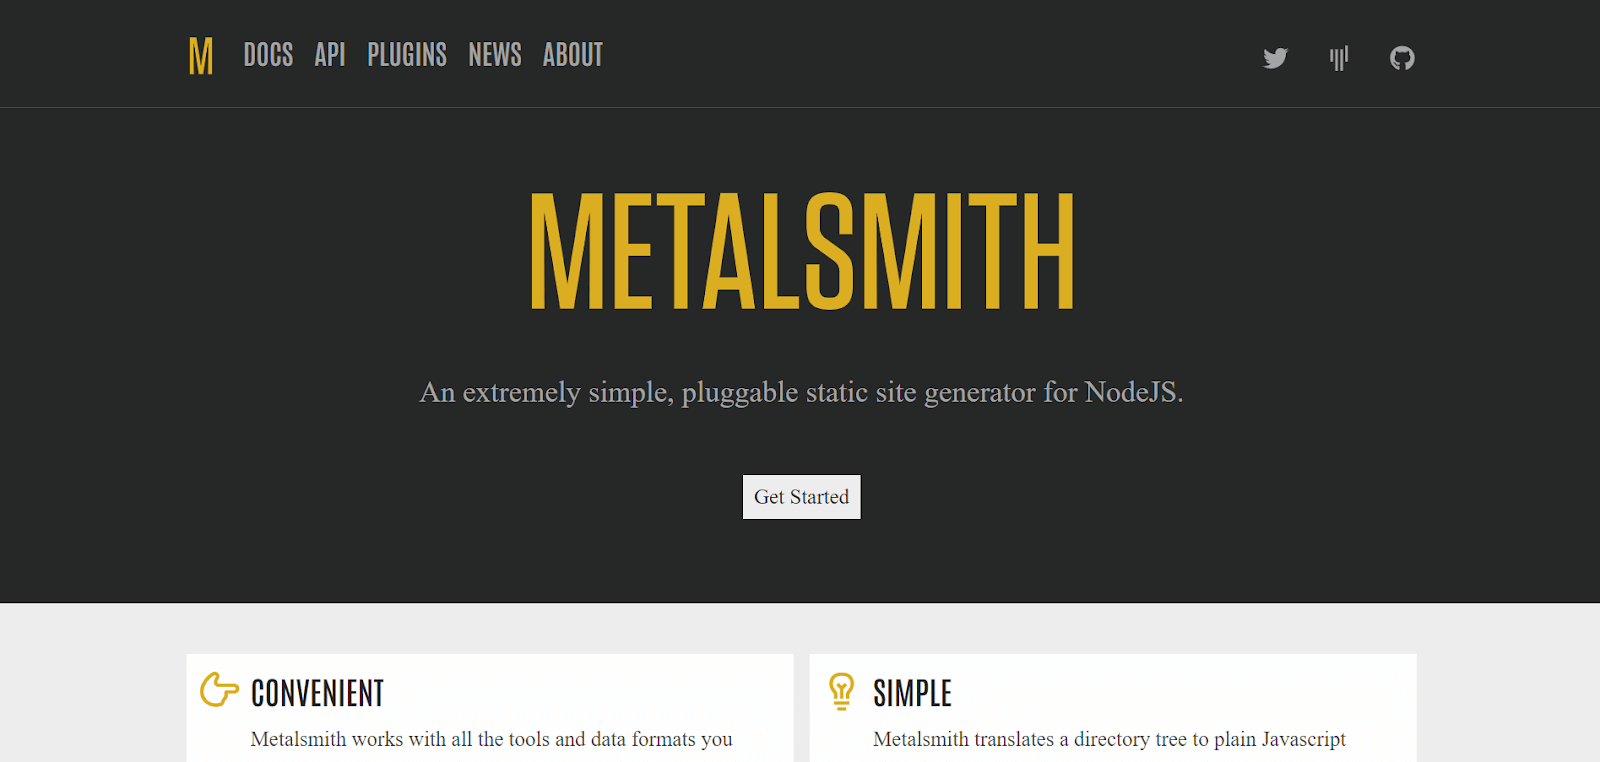 Mеtalsmith is a top static site generator